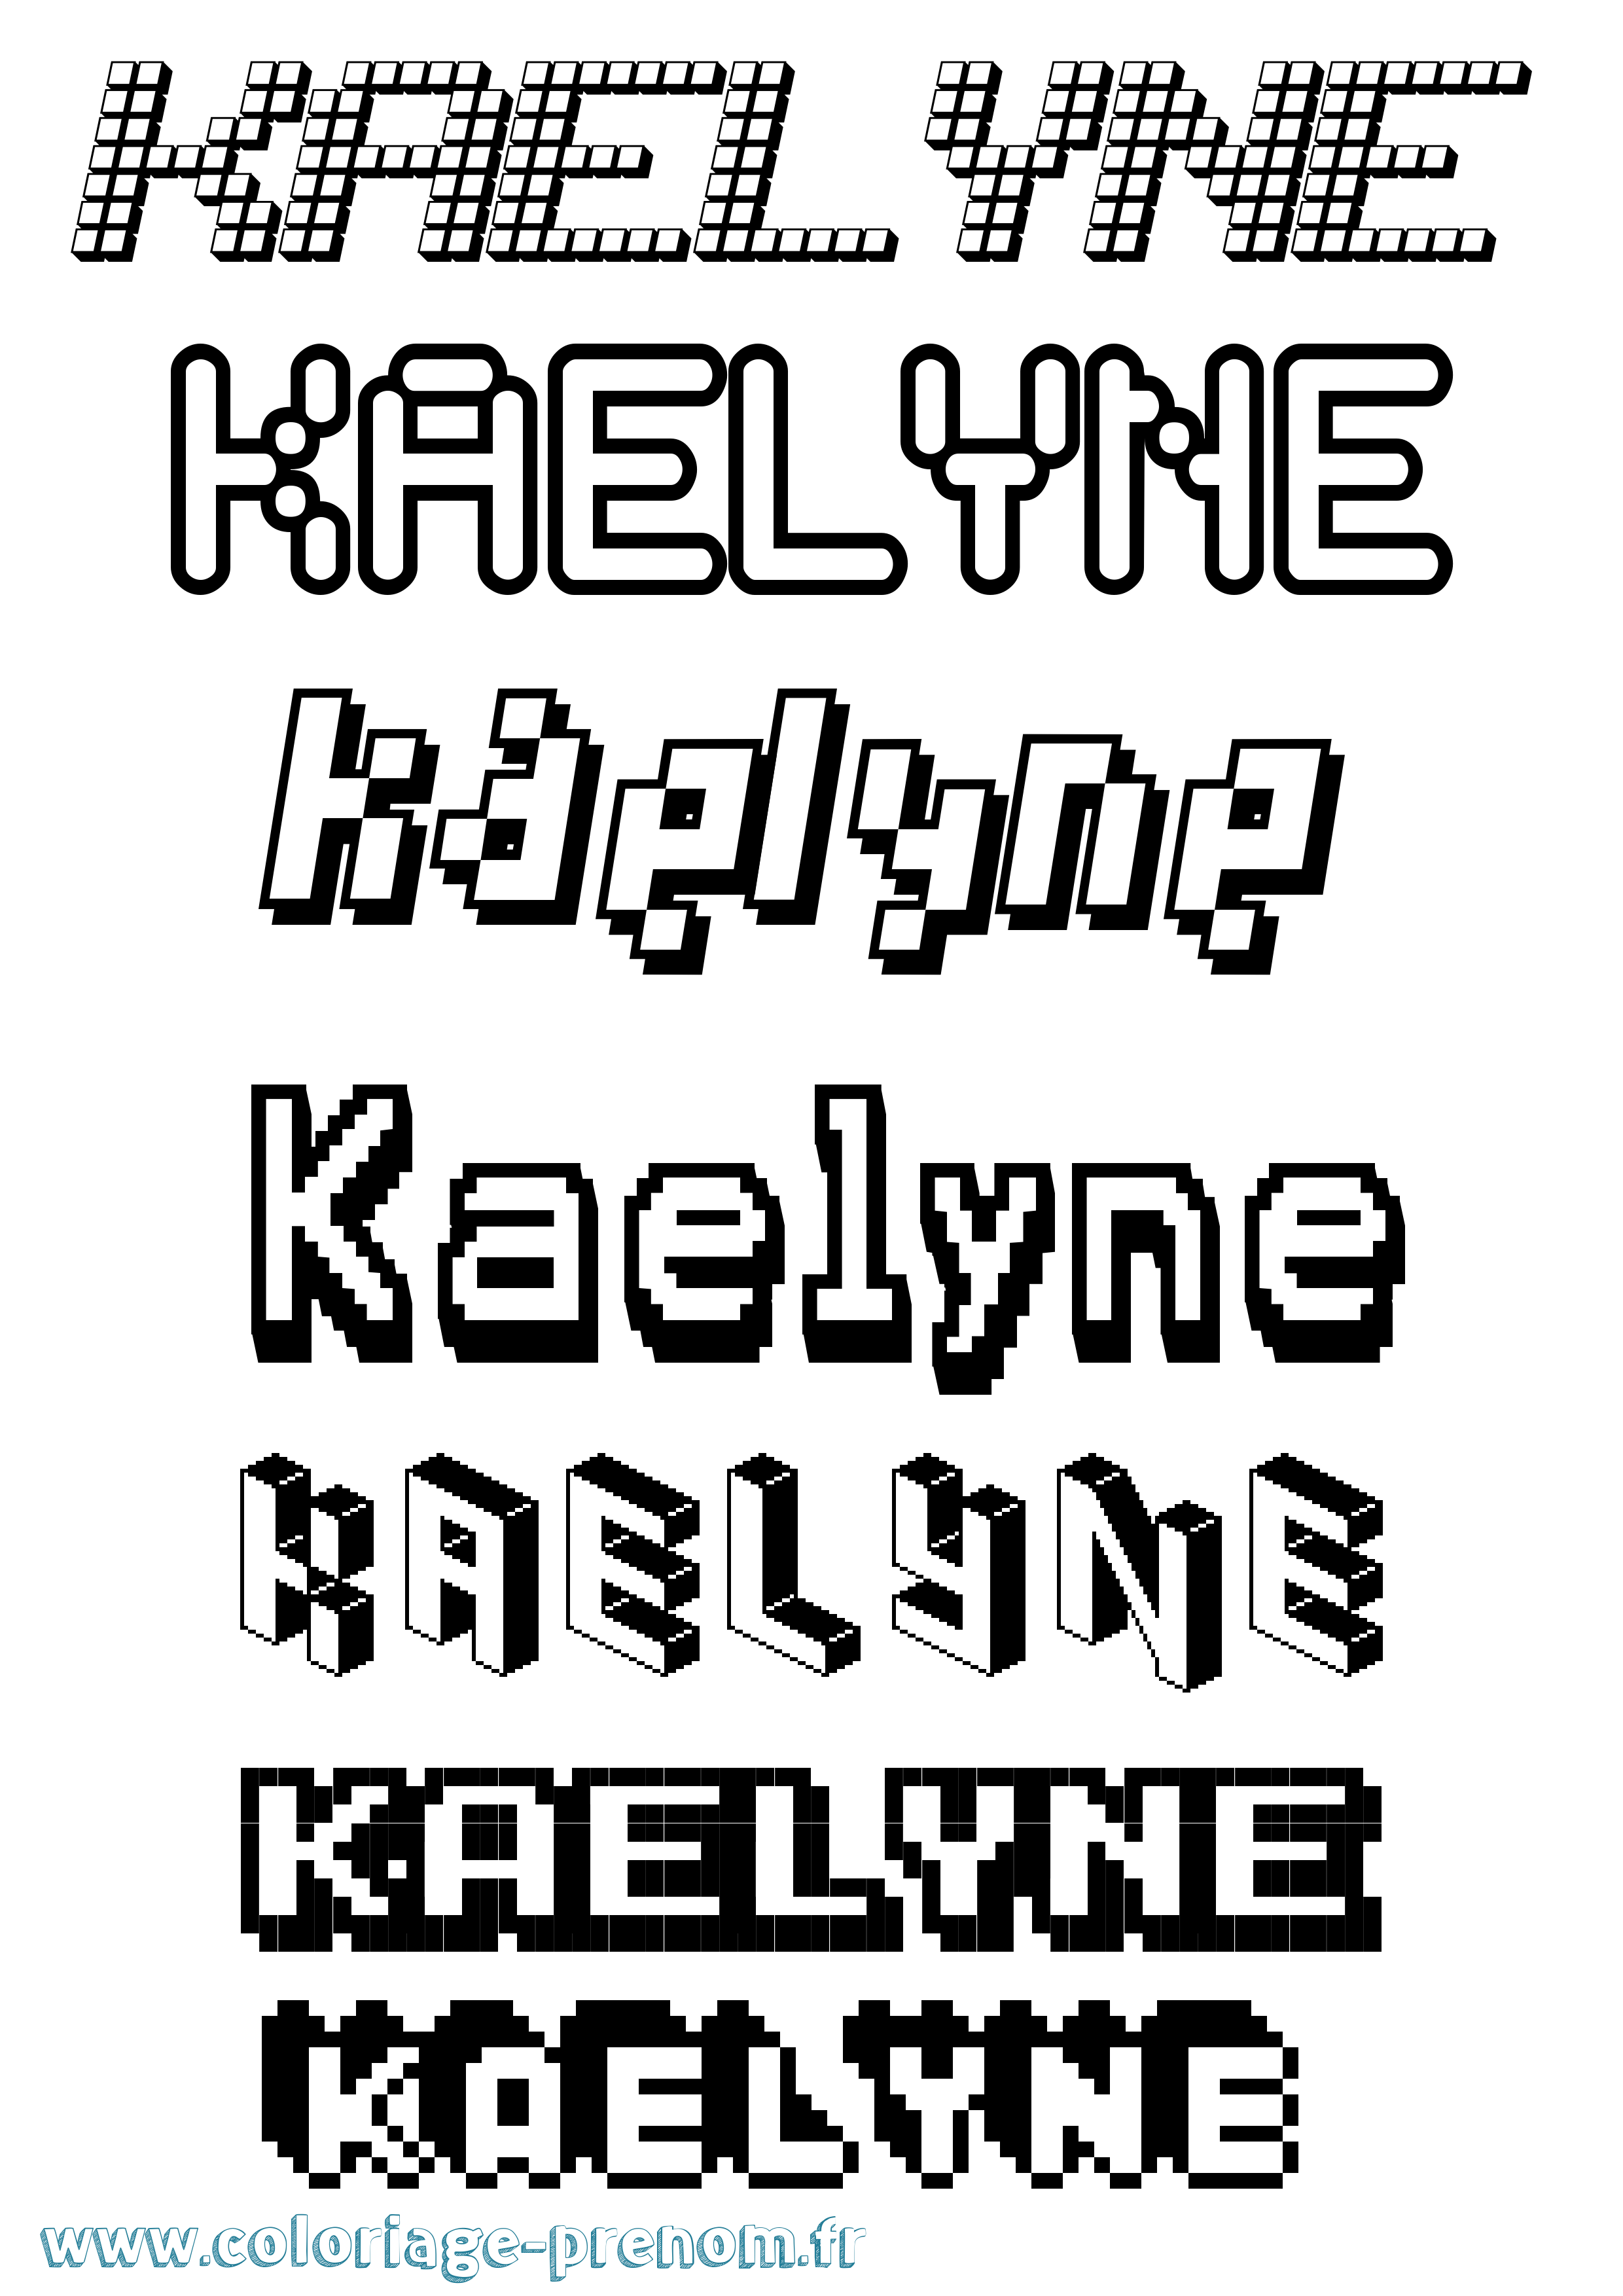 Coloriage prénom Kaelyne Pixel